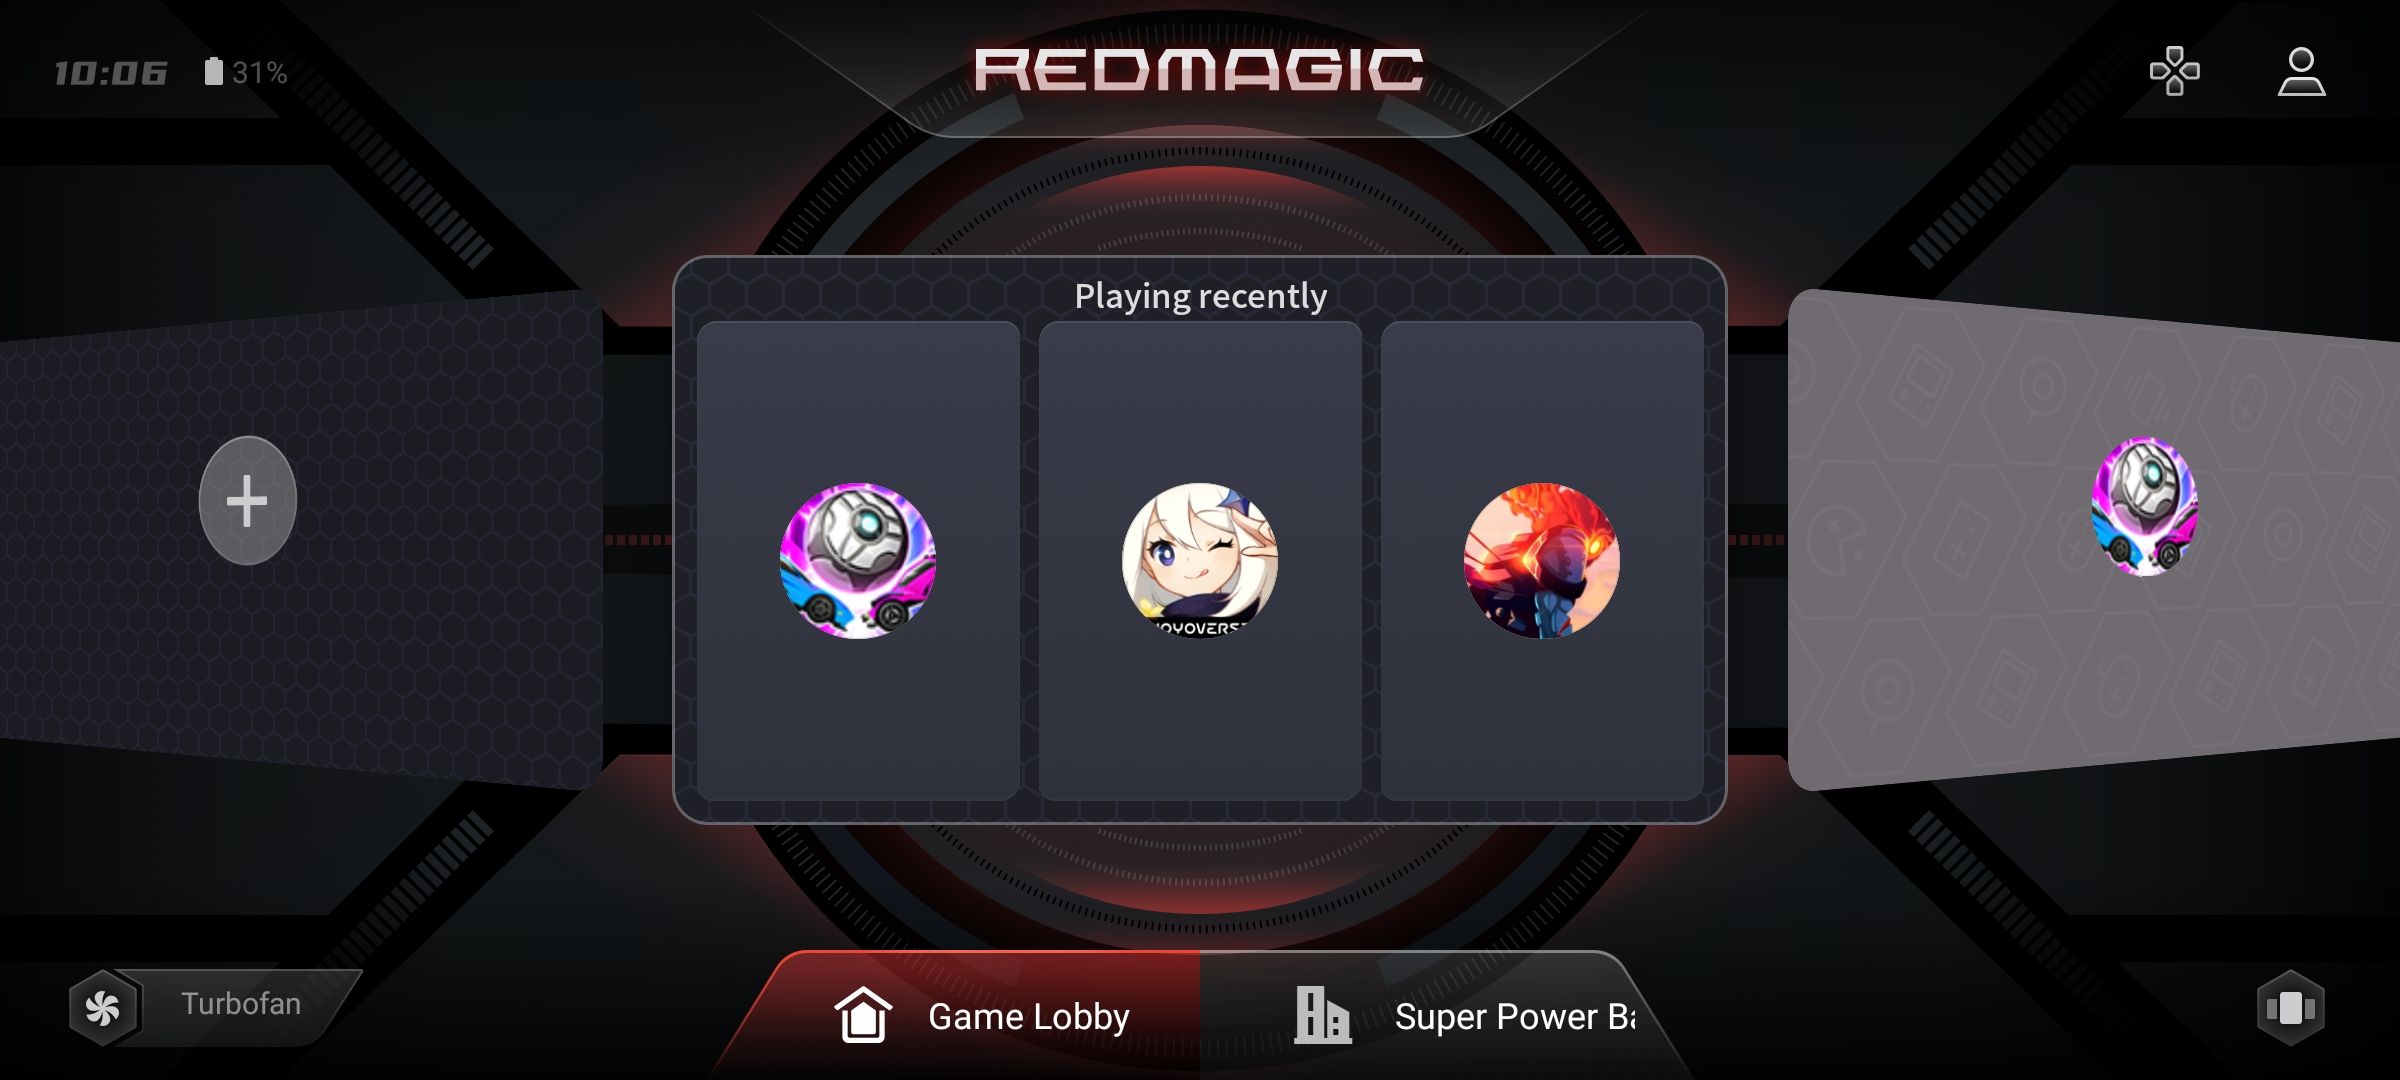 redmagic 7 review game space